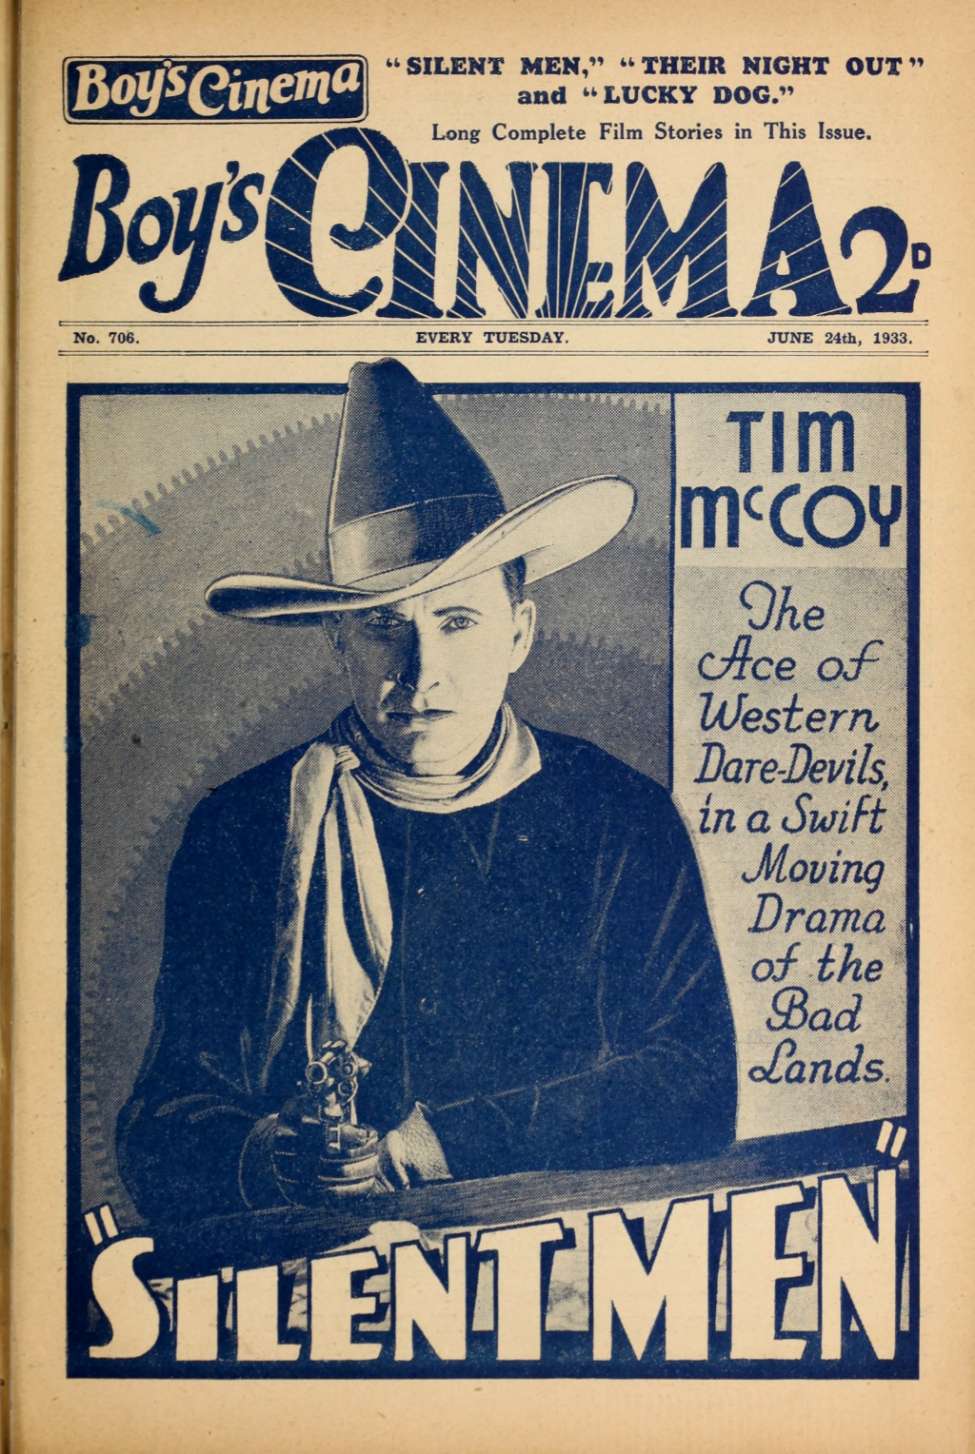 Comic Book Cover For Boy's Cinema 706 - Silent Men - Tim McCoy